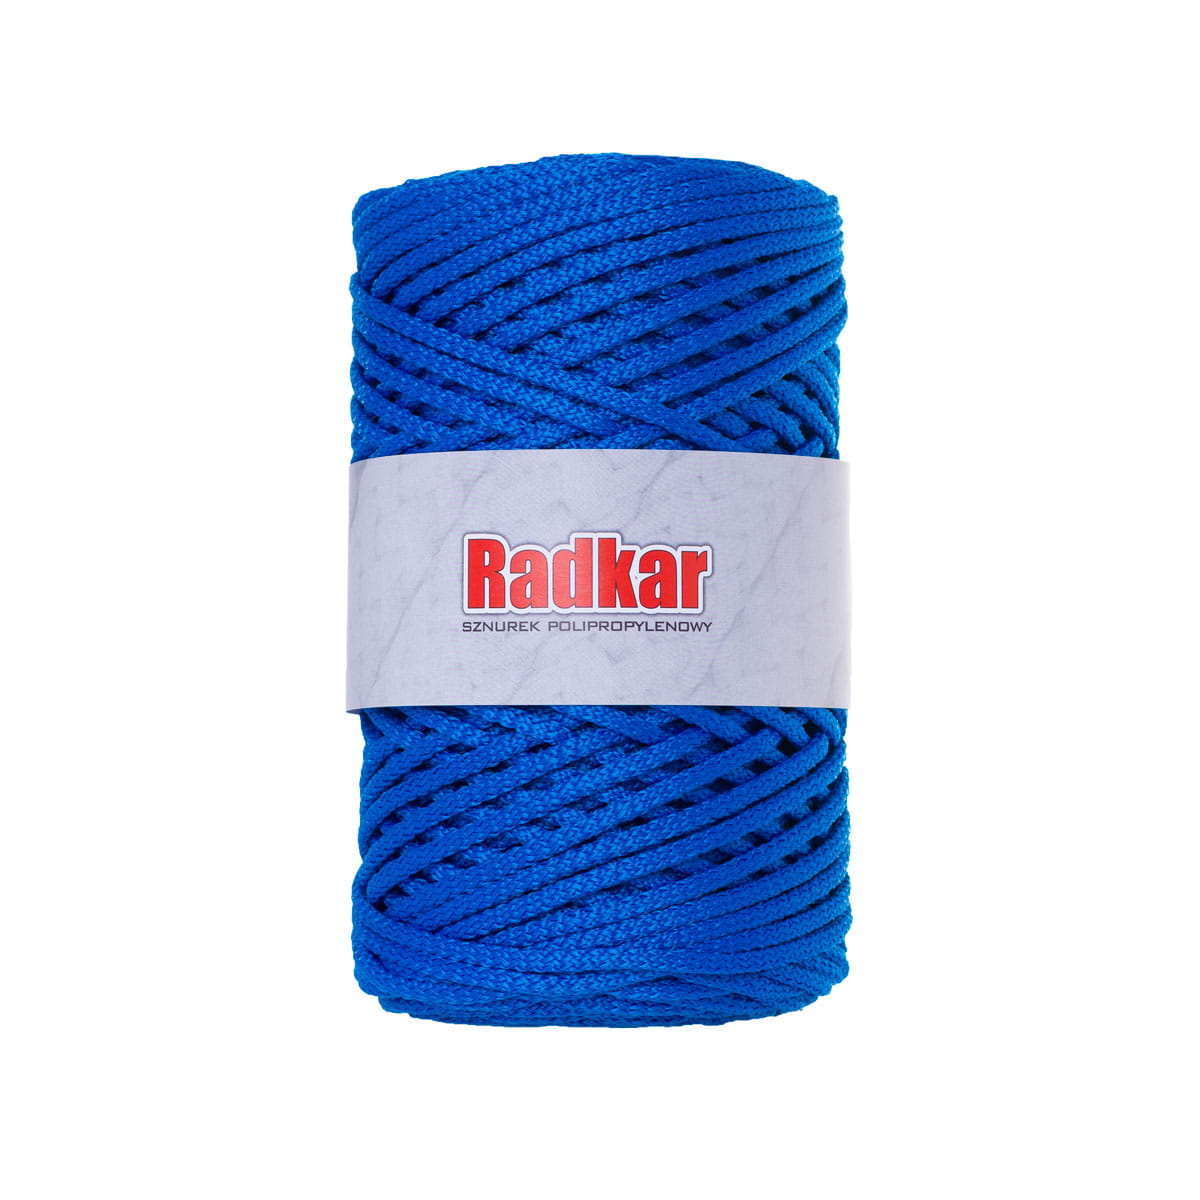 5mm polypropylene cord braided macrame rope handmade drawstring radkar uv resistant 